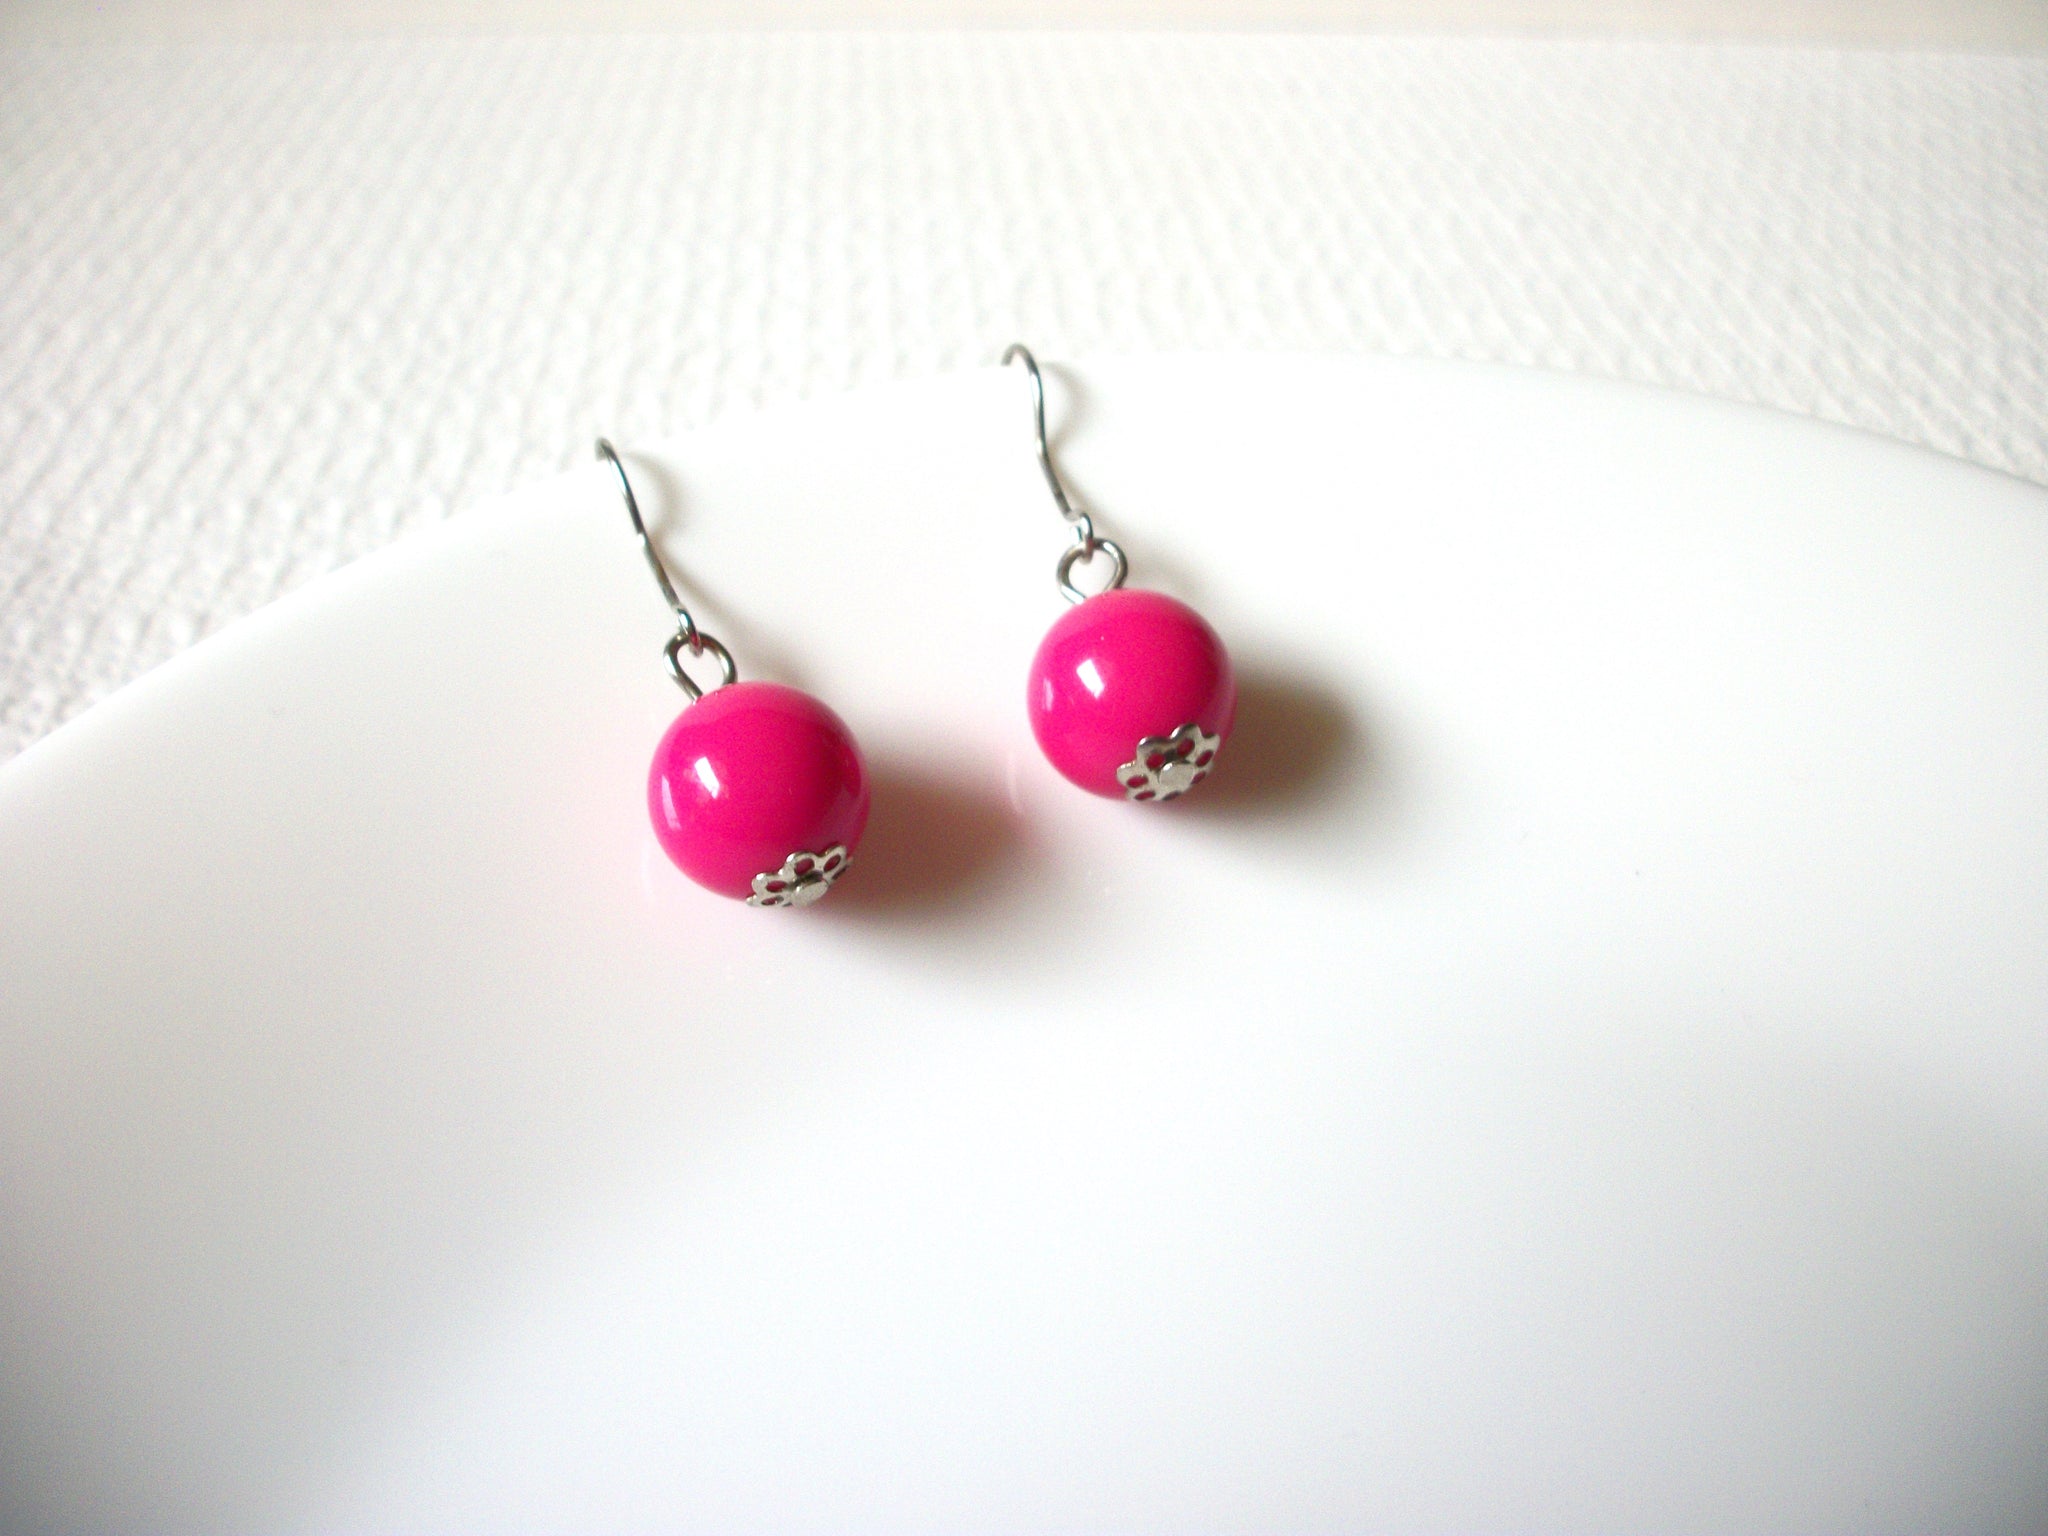 Retro Pink Dangle Earrings 81020